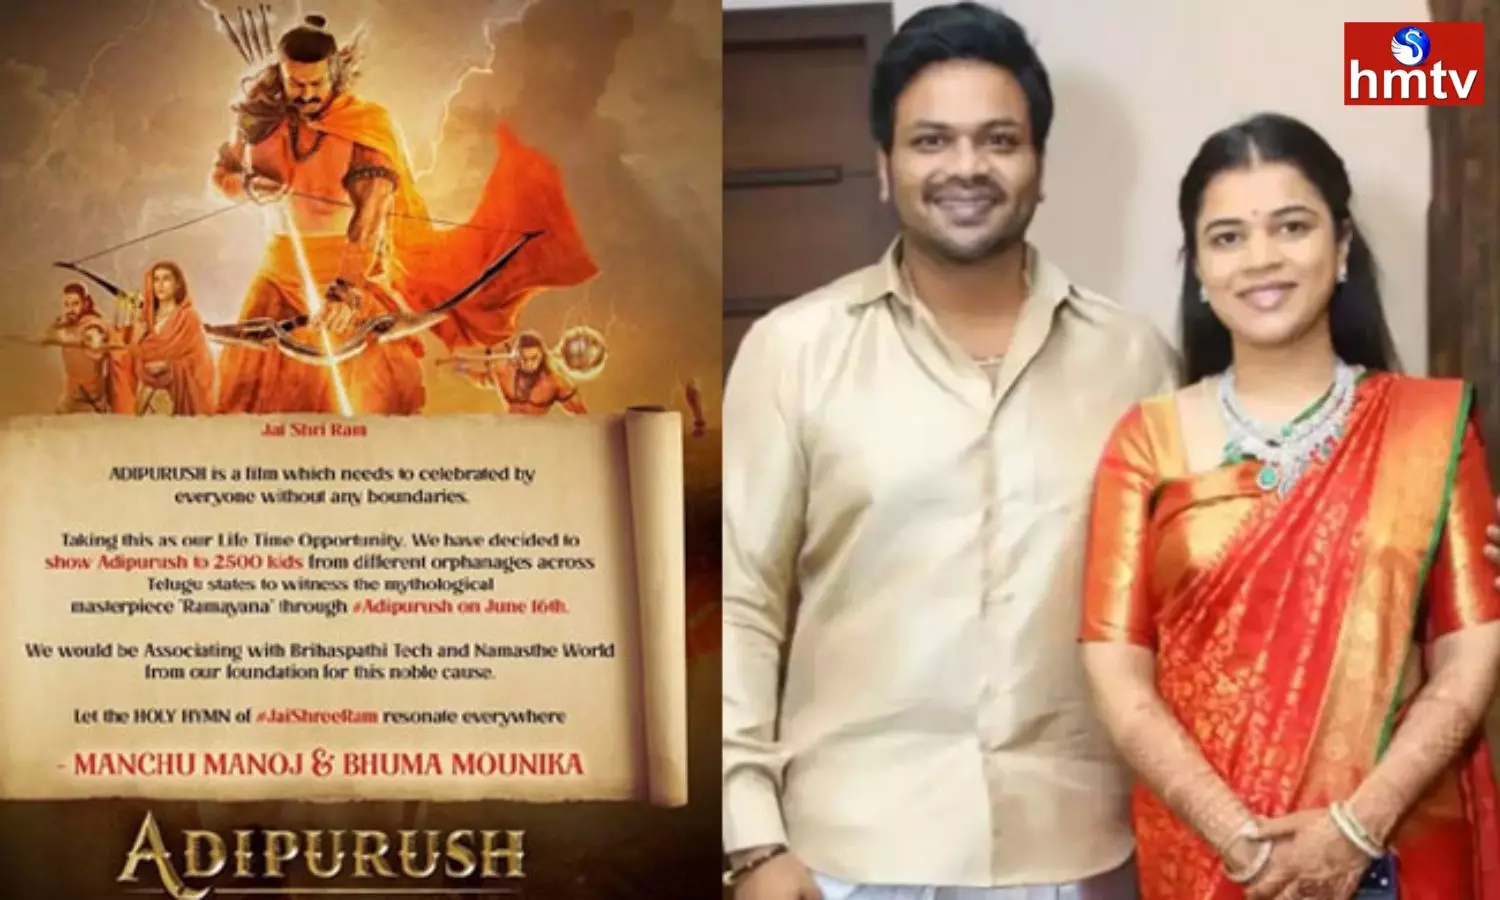 Manchu Manoj To Book 2500 Tickets Of Adipurush Film For Orphan Kids